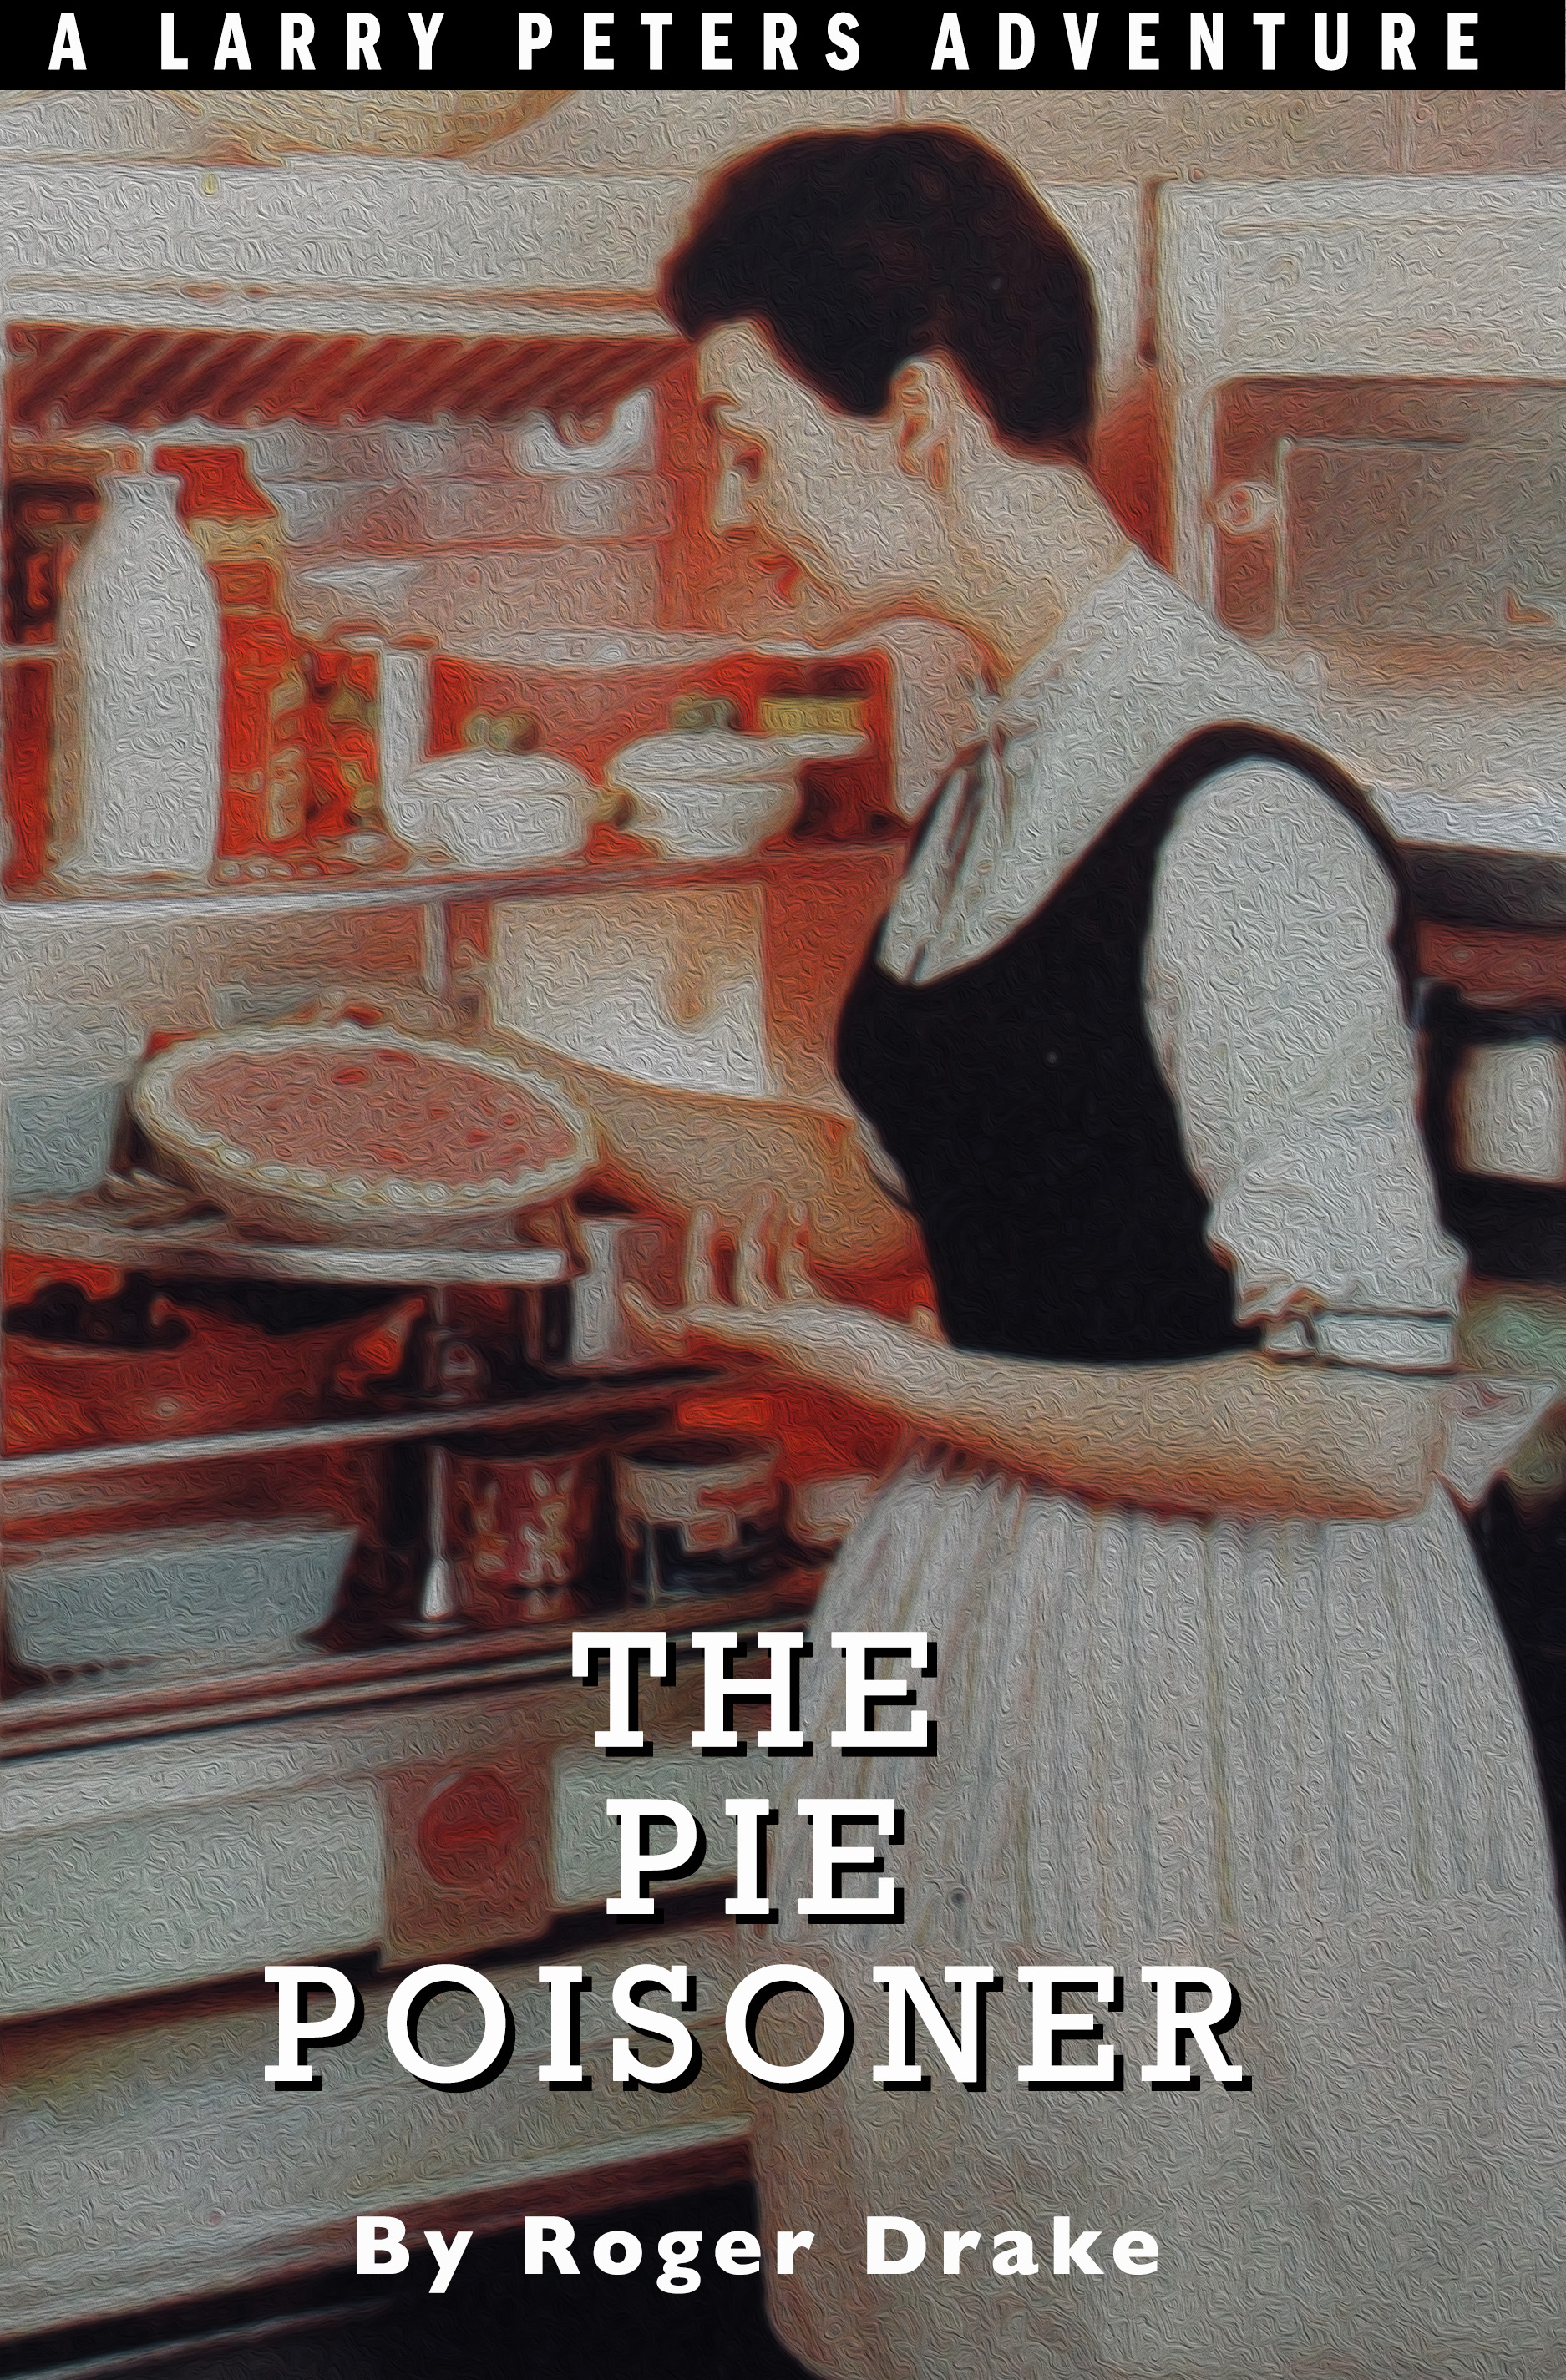 Larry Peters book The Pie Poisoner